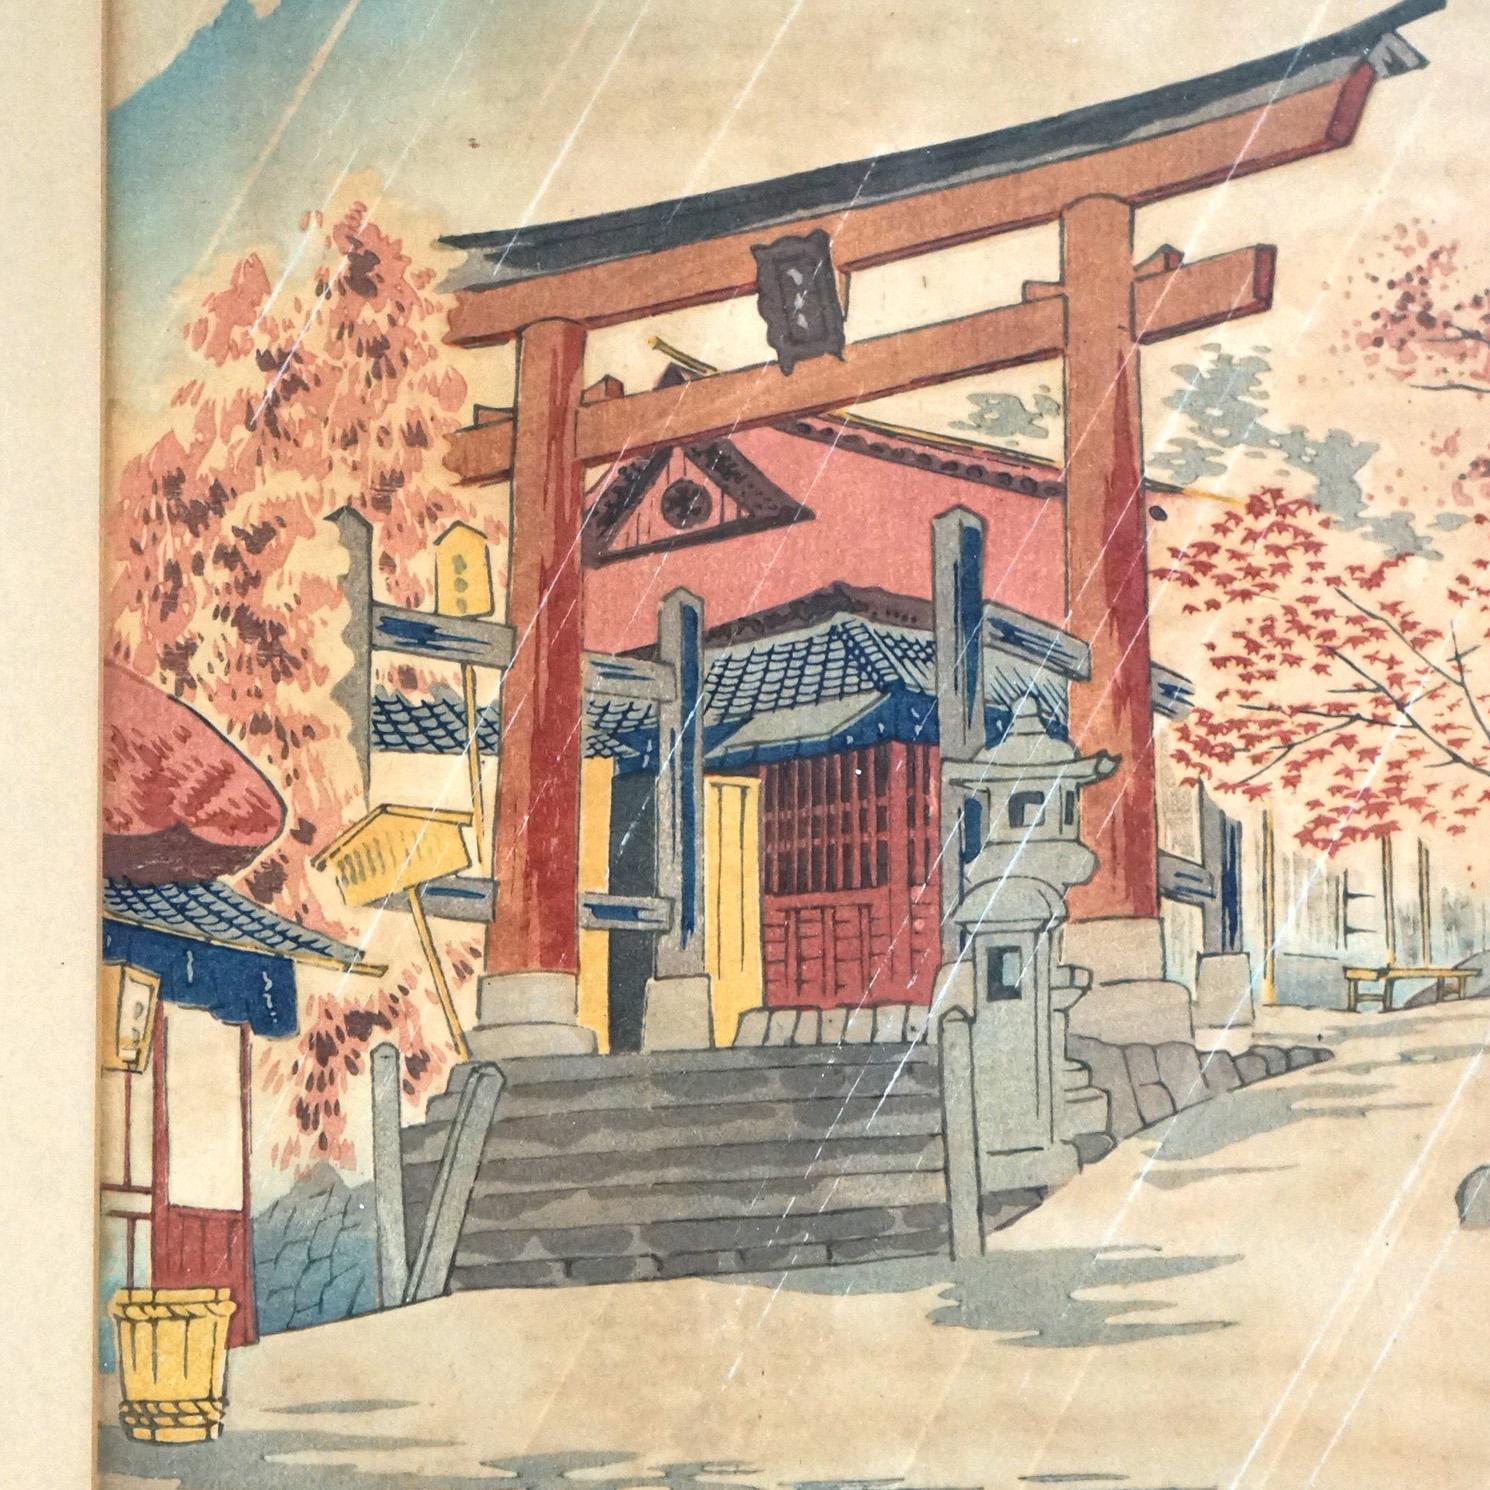 Japanese Woodblock Print of Pagoda at Mt Fugi by Tokuriki Tomikichiro 20thC

Measures - 15.75